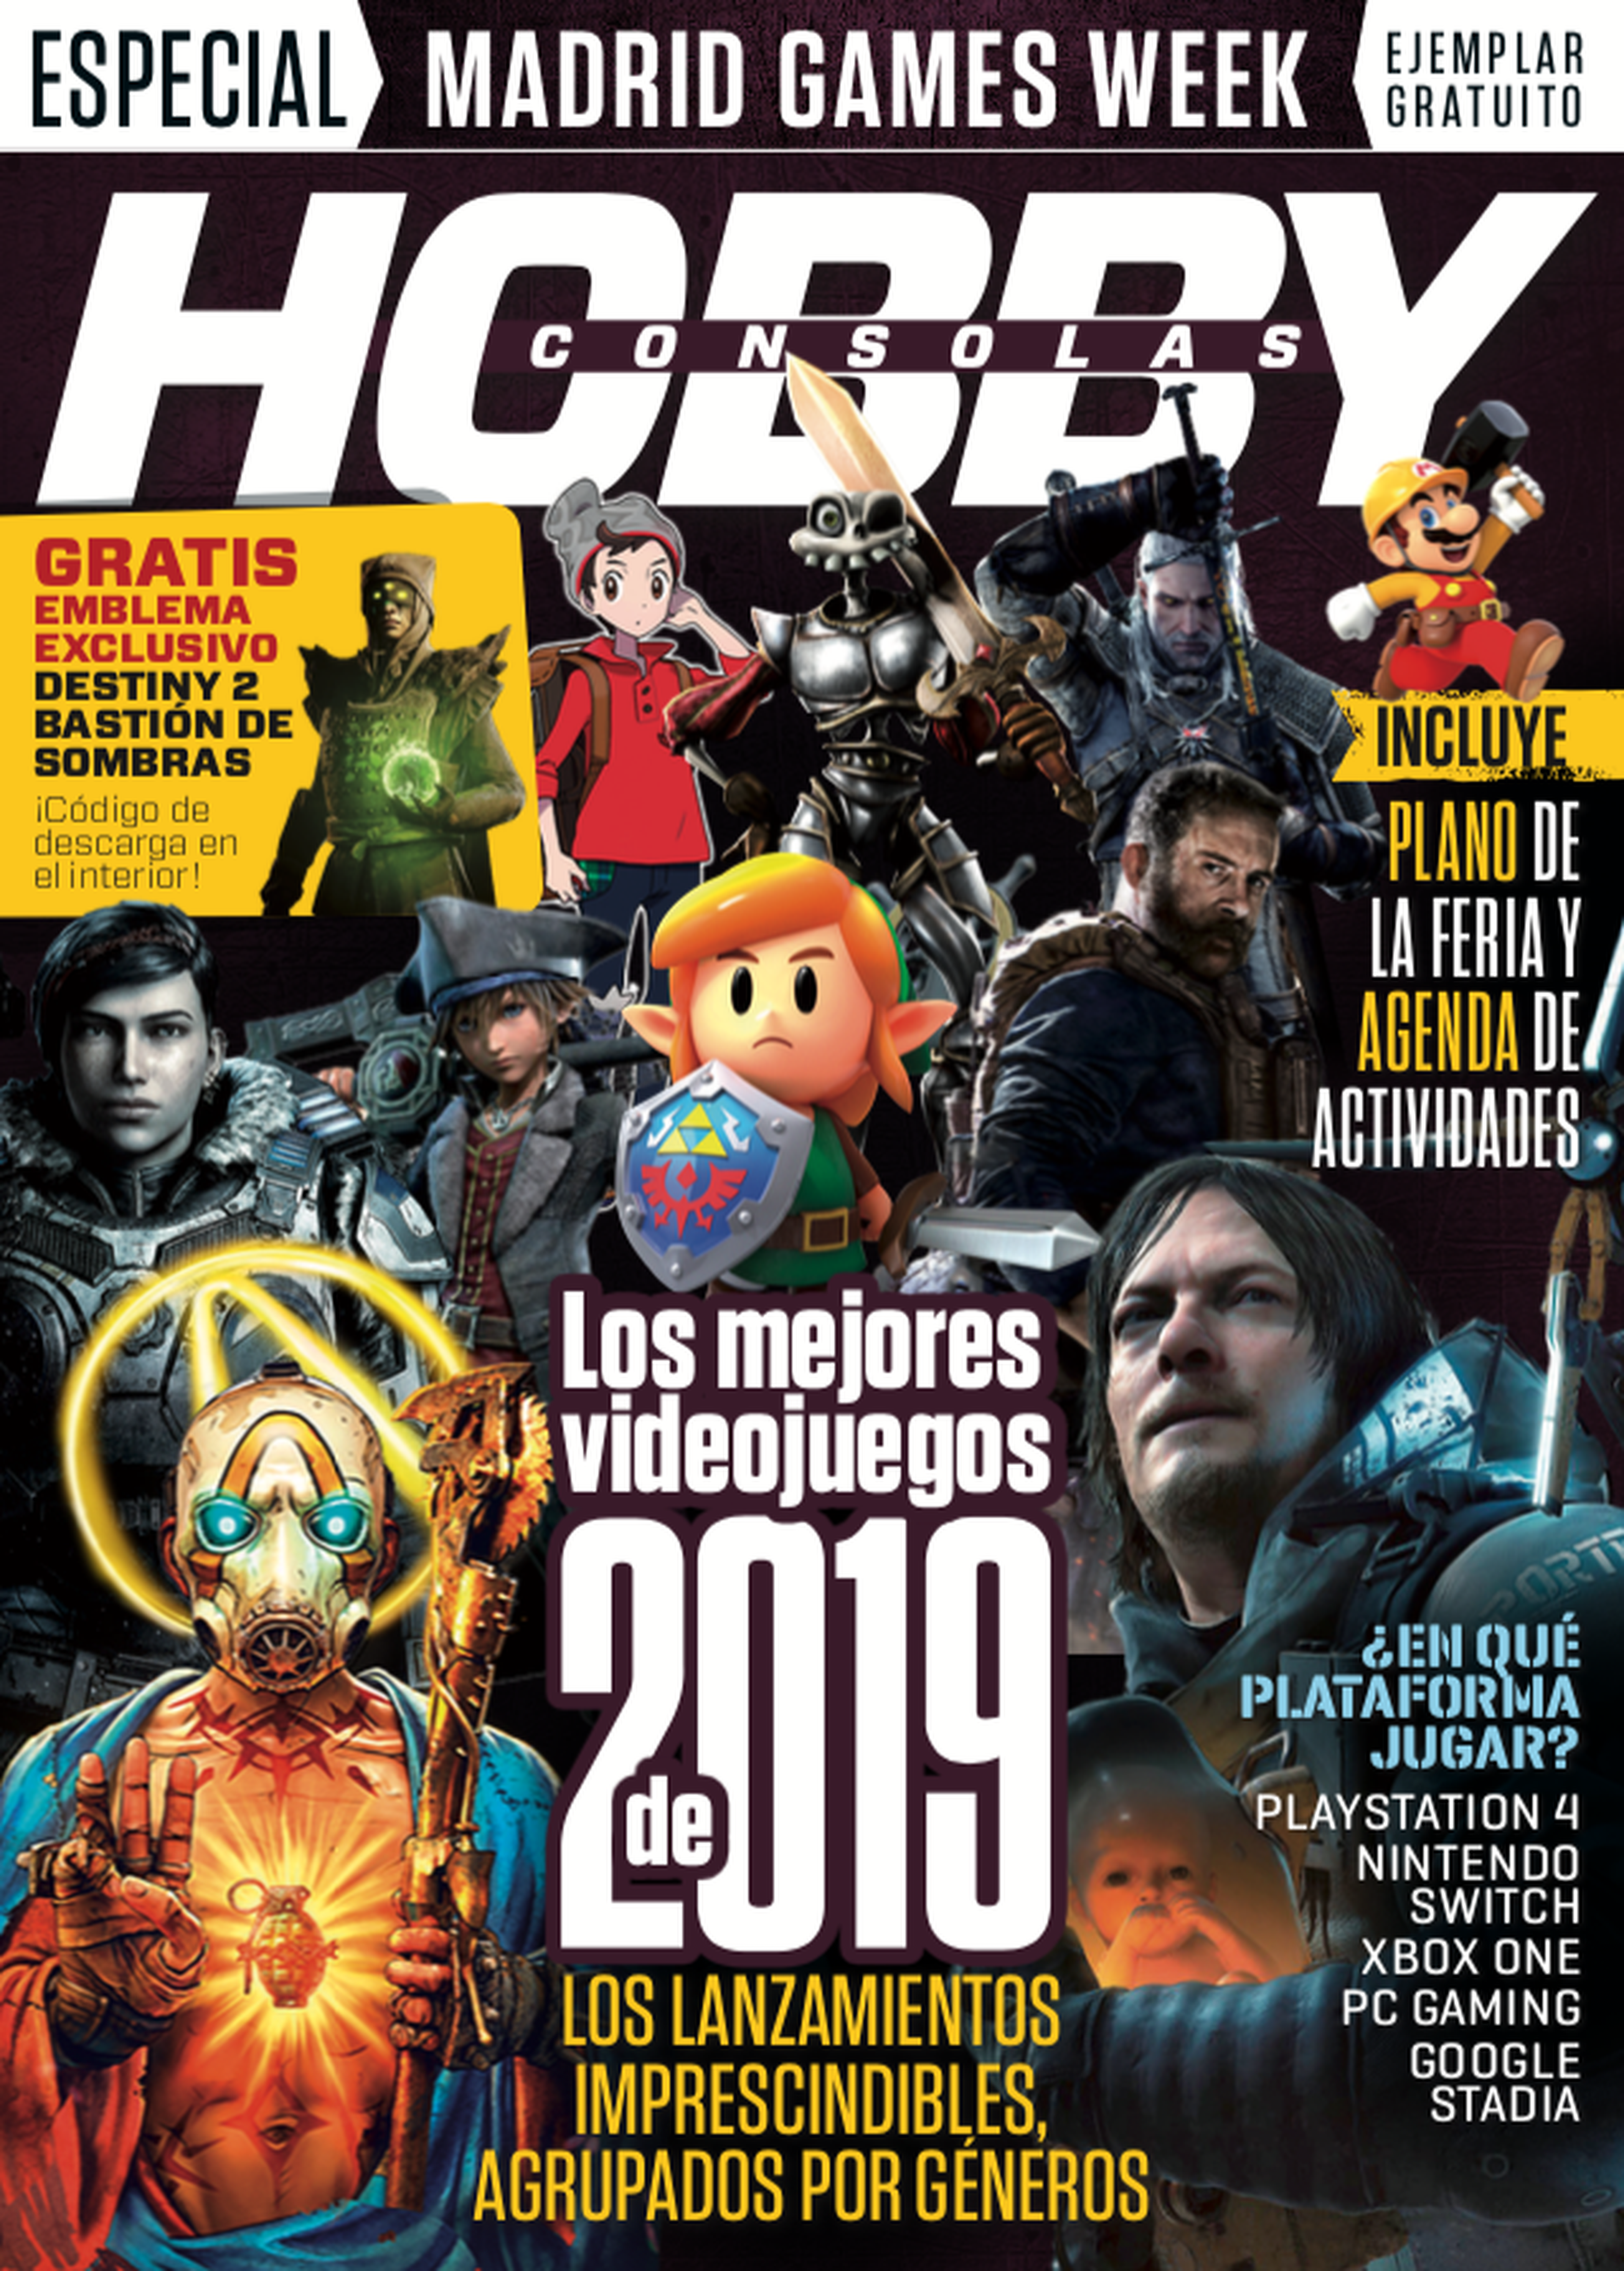 Hobby Consolas especial Madrid Games Week - portada